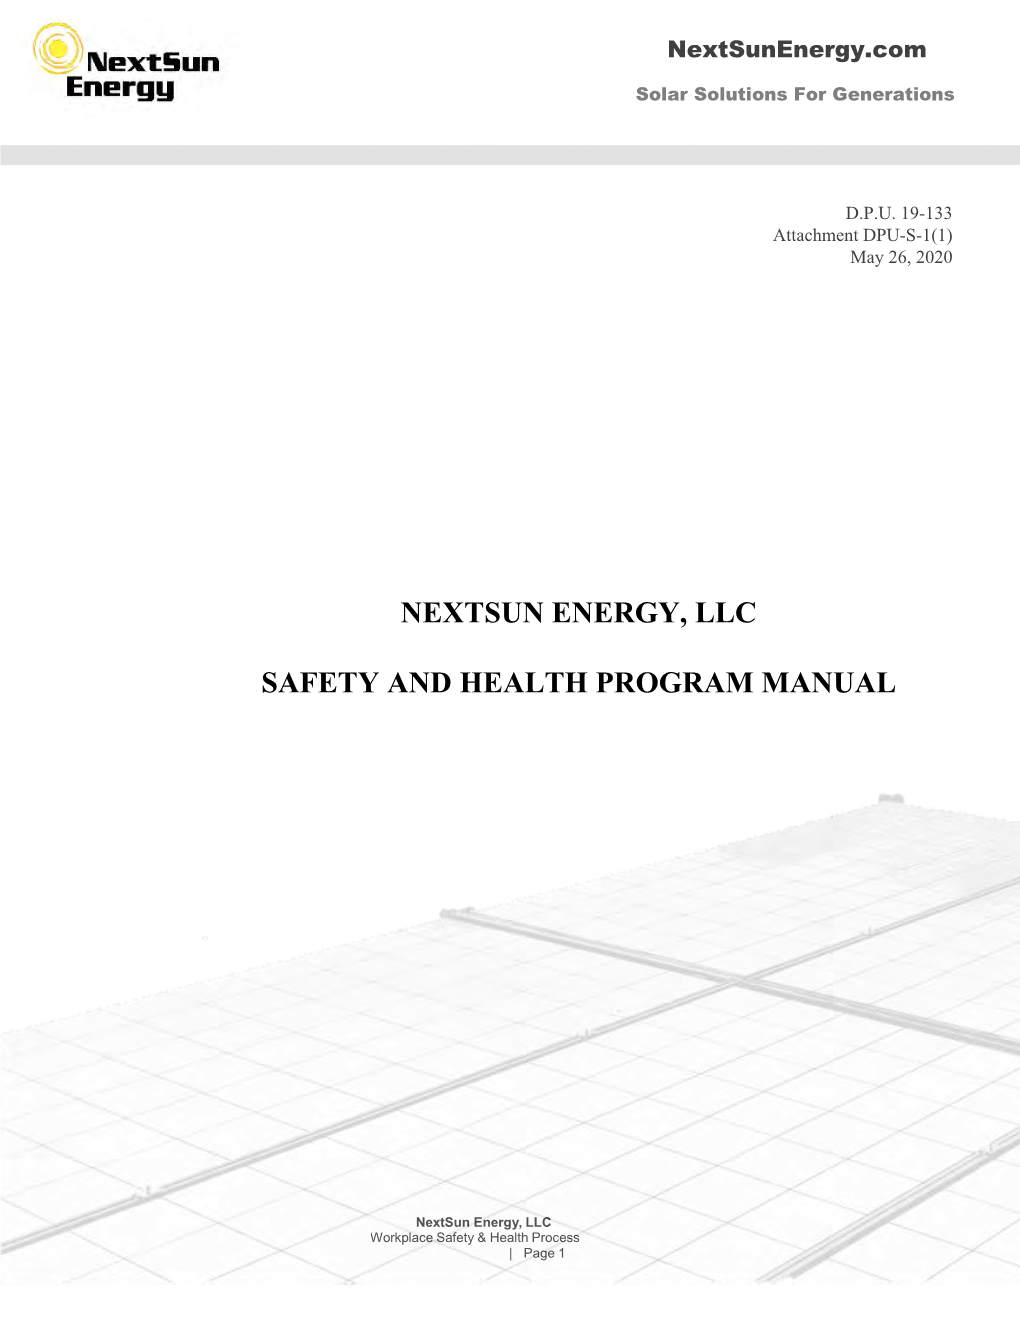 Nextsun Energy, Llc Safety and Health Program Manual